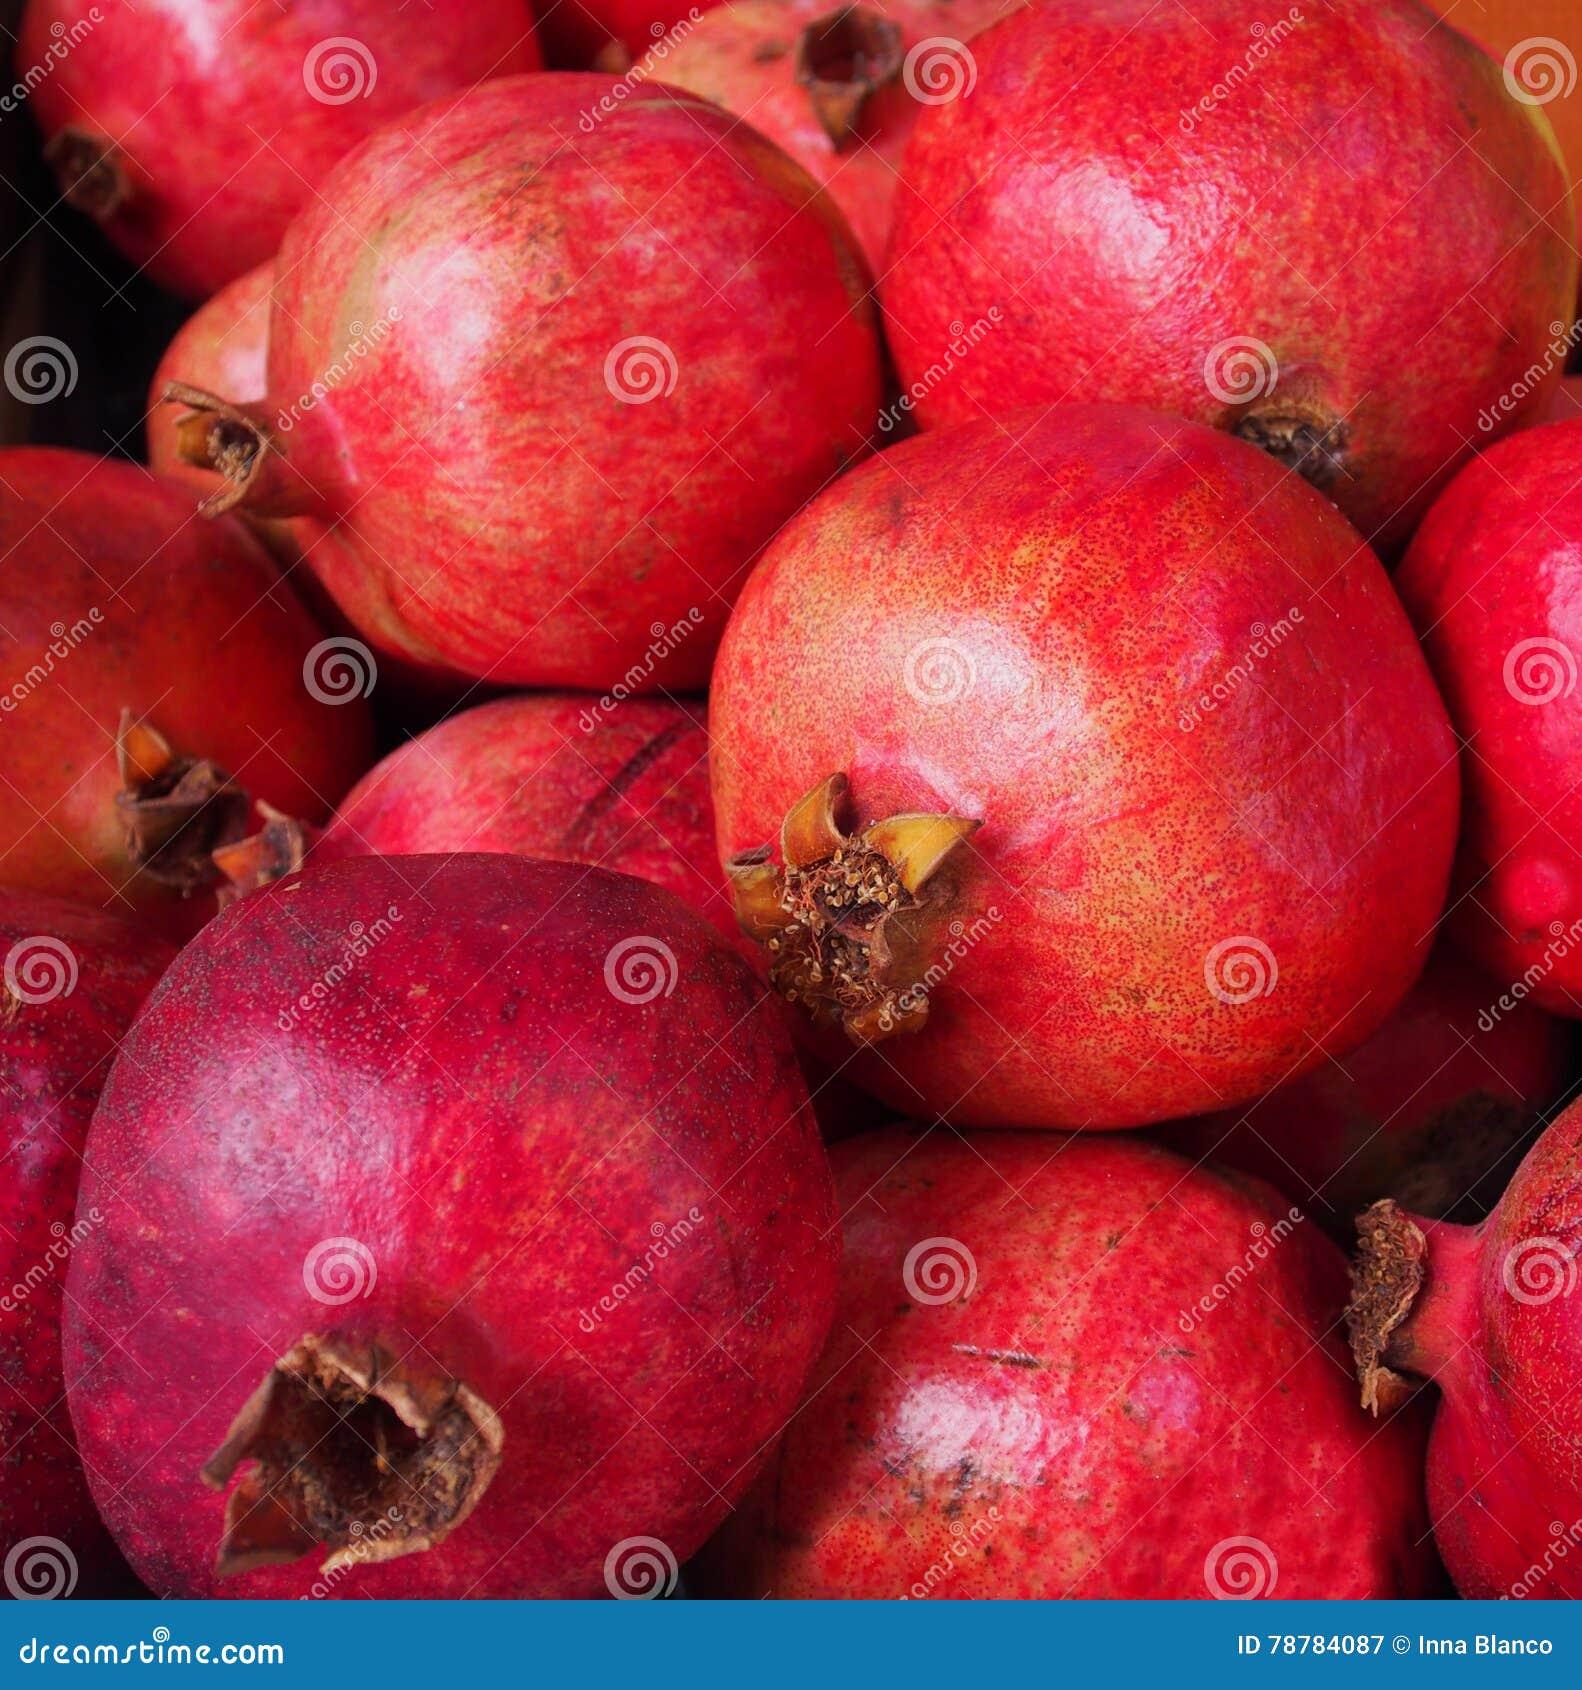 fresh ripe pomegranates t outdoor farmers market.